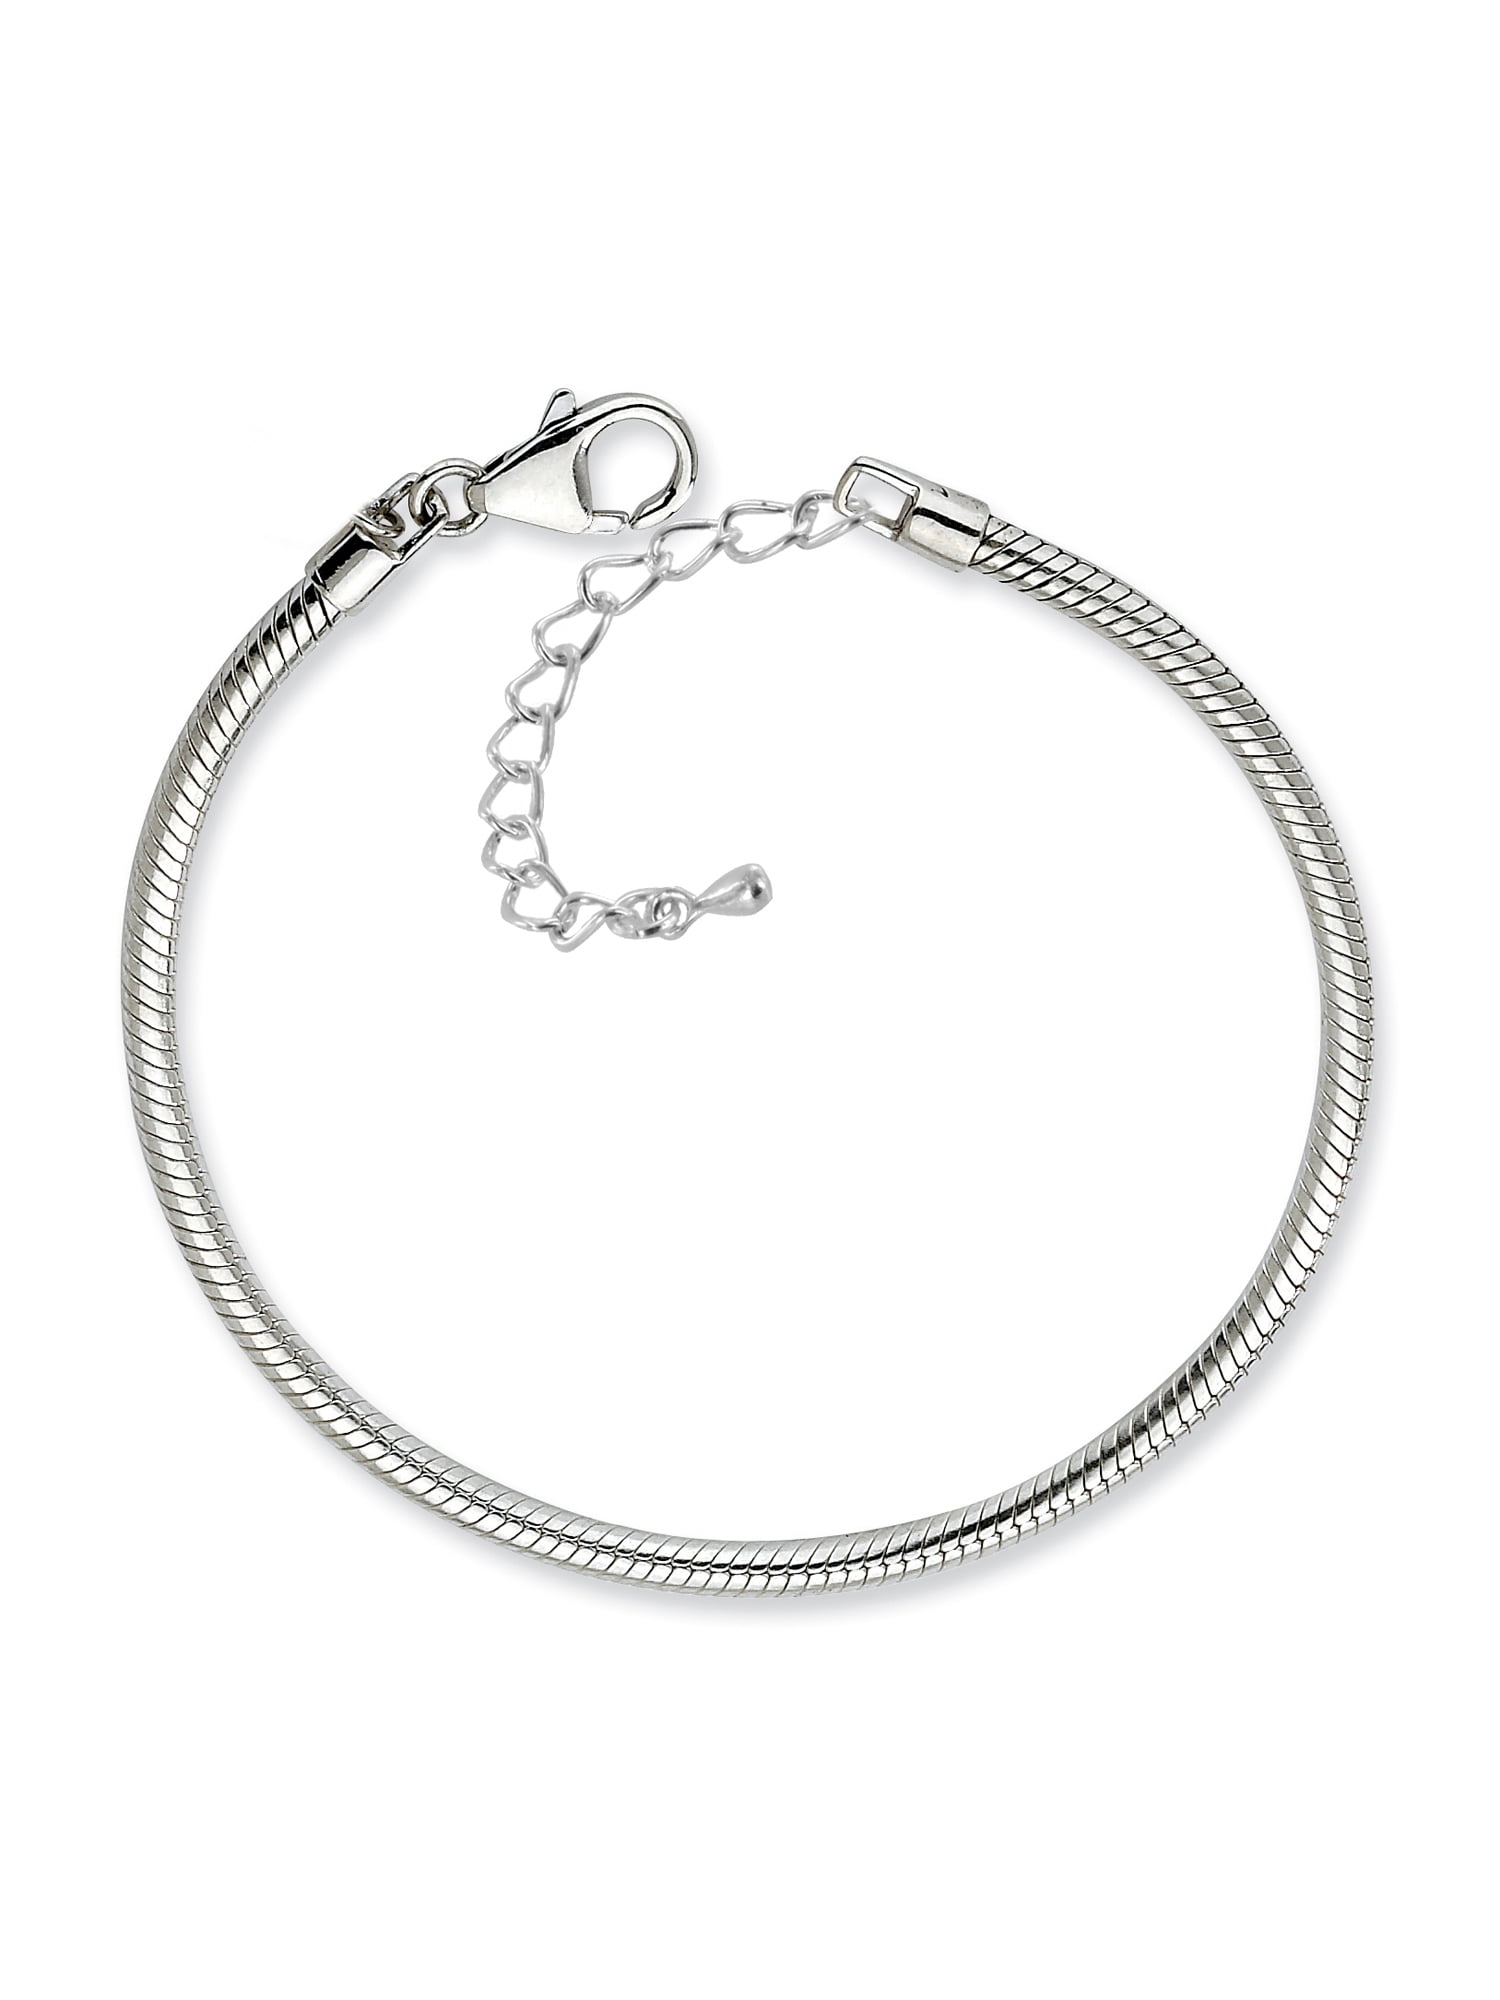 Sterling Silver Bracelet Charm Beads Heart Shape Animal Valentines Star 